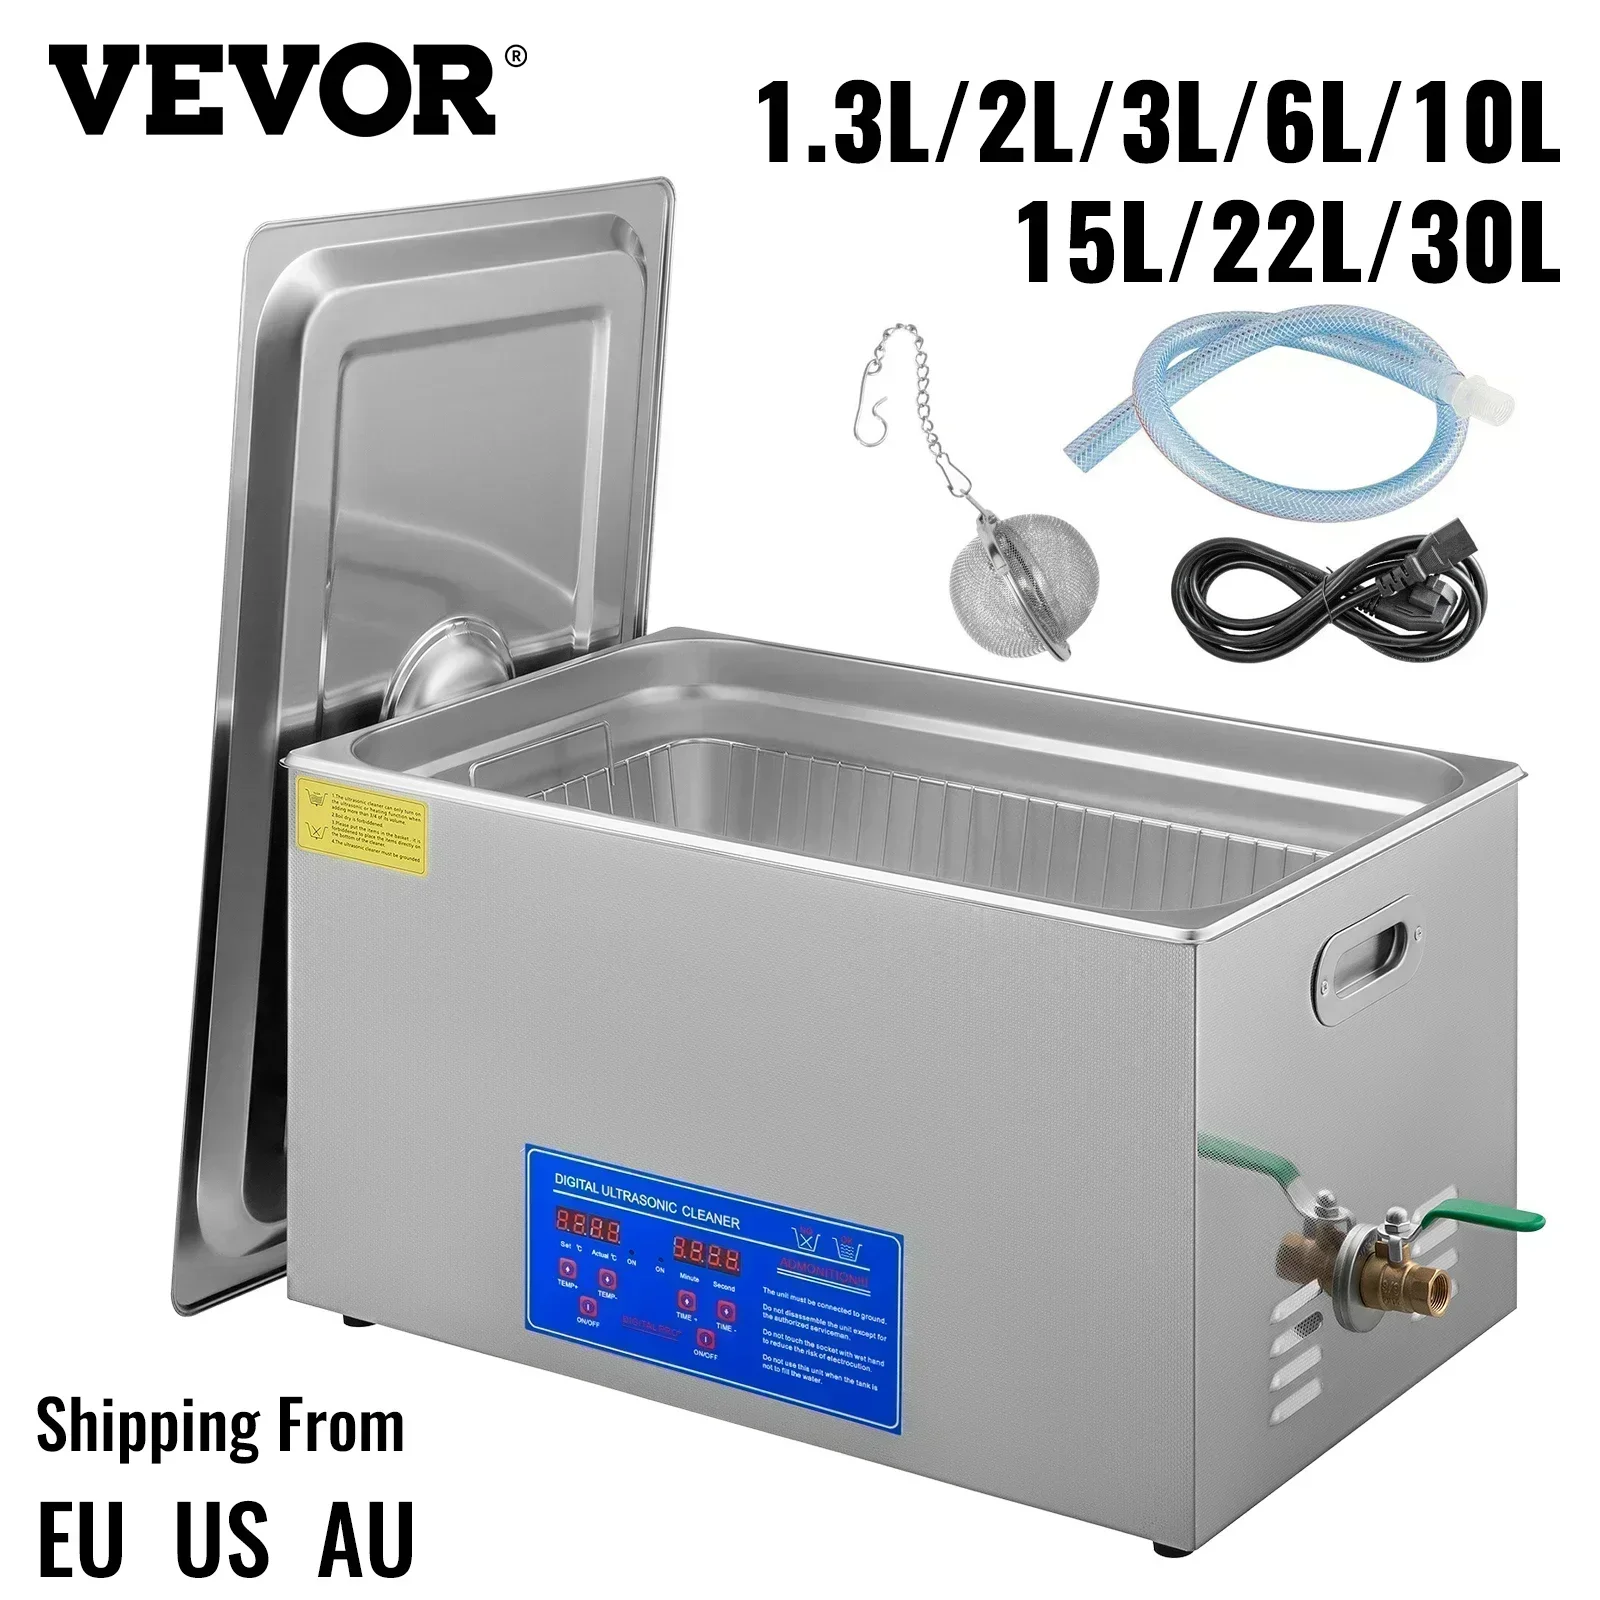 VEVOR Ultrasonic Cleaner 2L 3L 6L 10L 15L 22L 30L Digital Timer Stainless Steel Bath Jewelry Glasses Watch Cleaning Machine